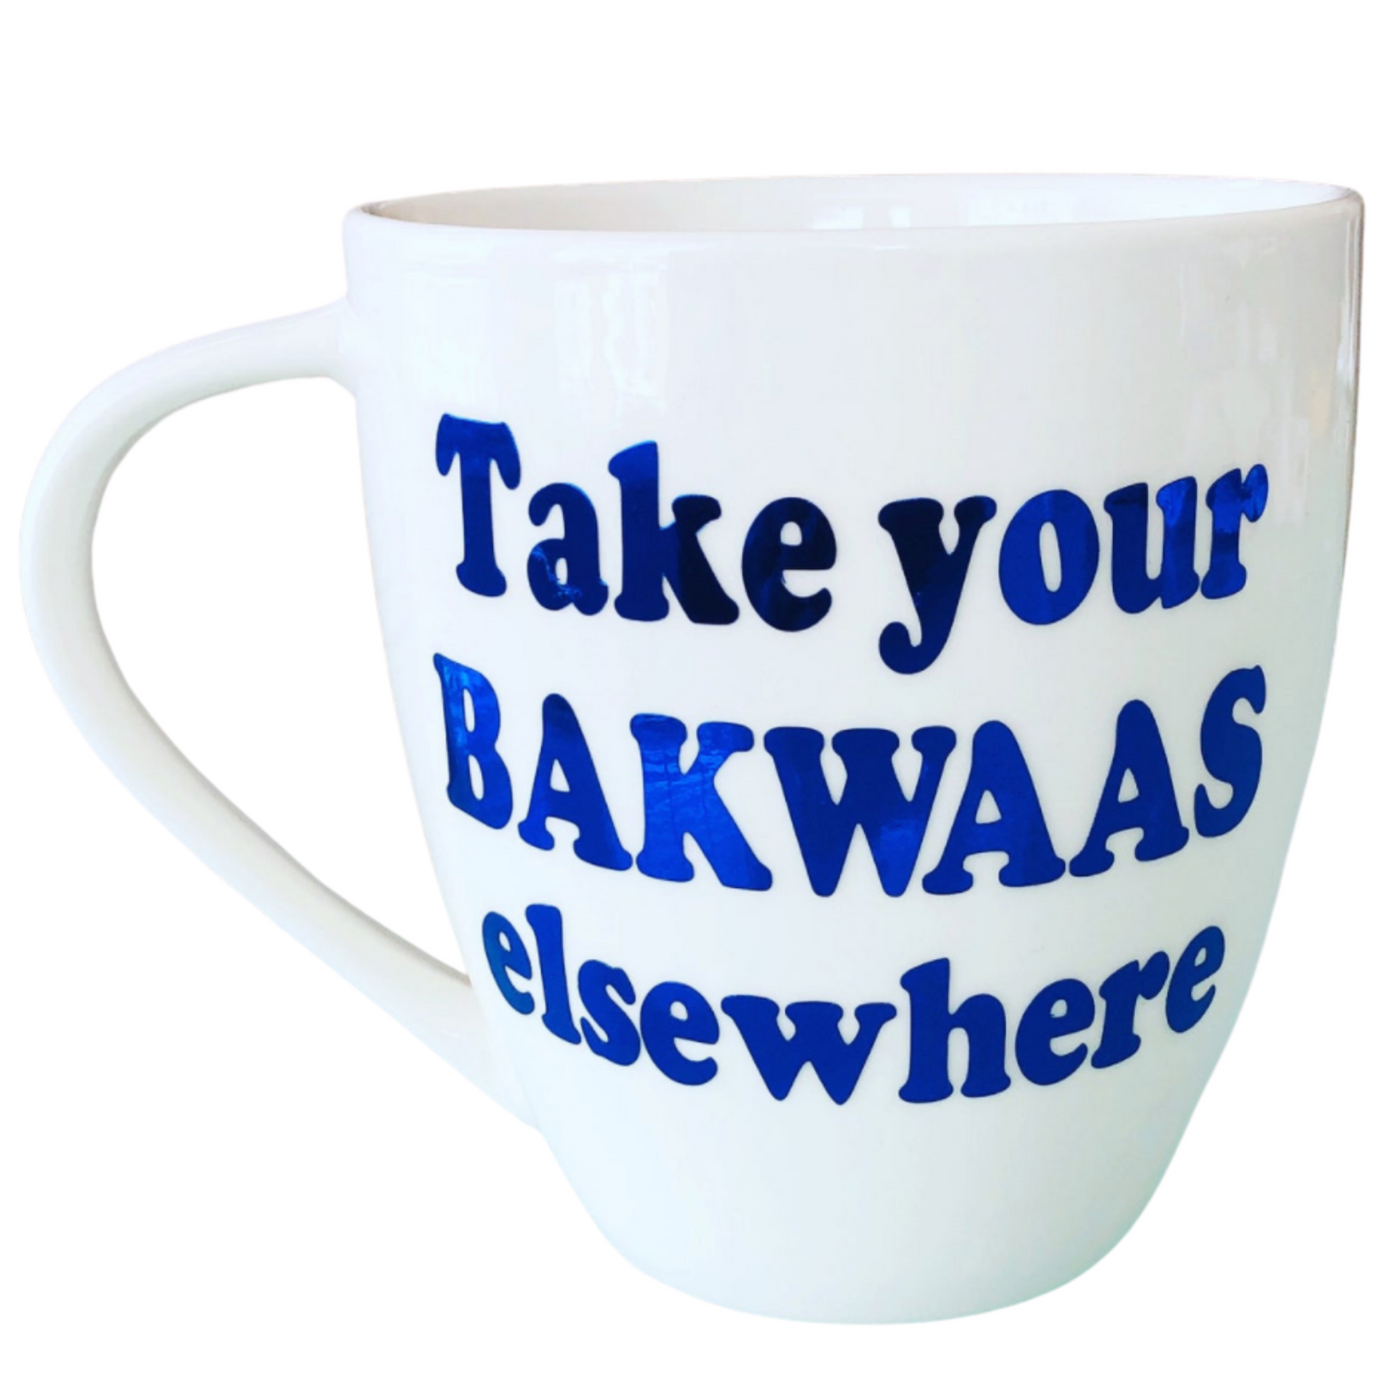 Take Your Bakwaas Elsewhere Mug